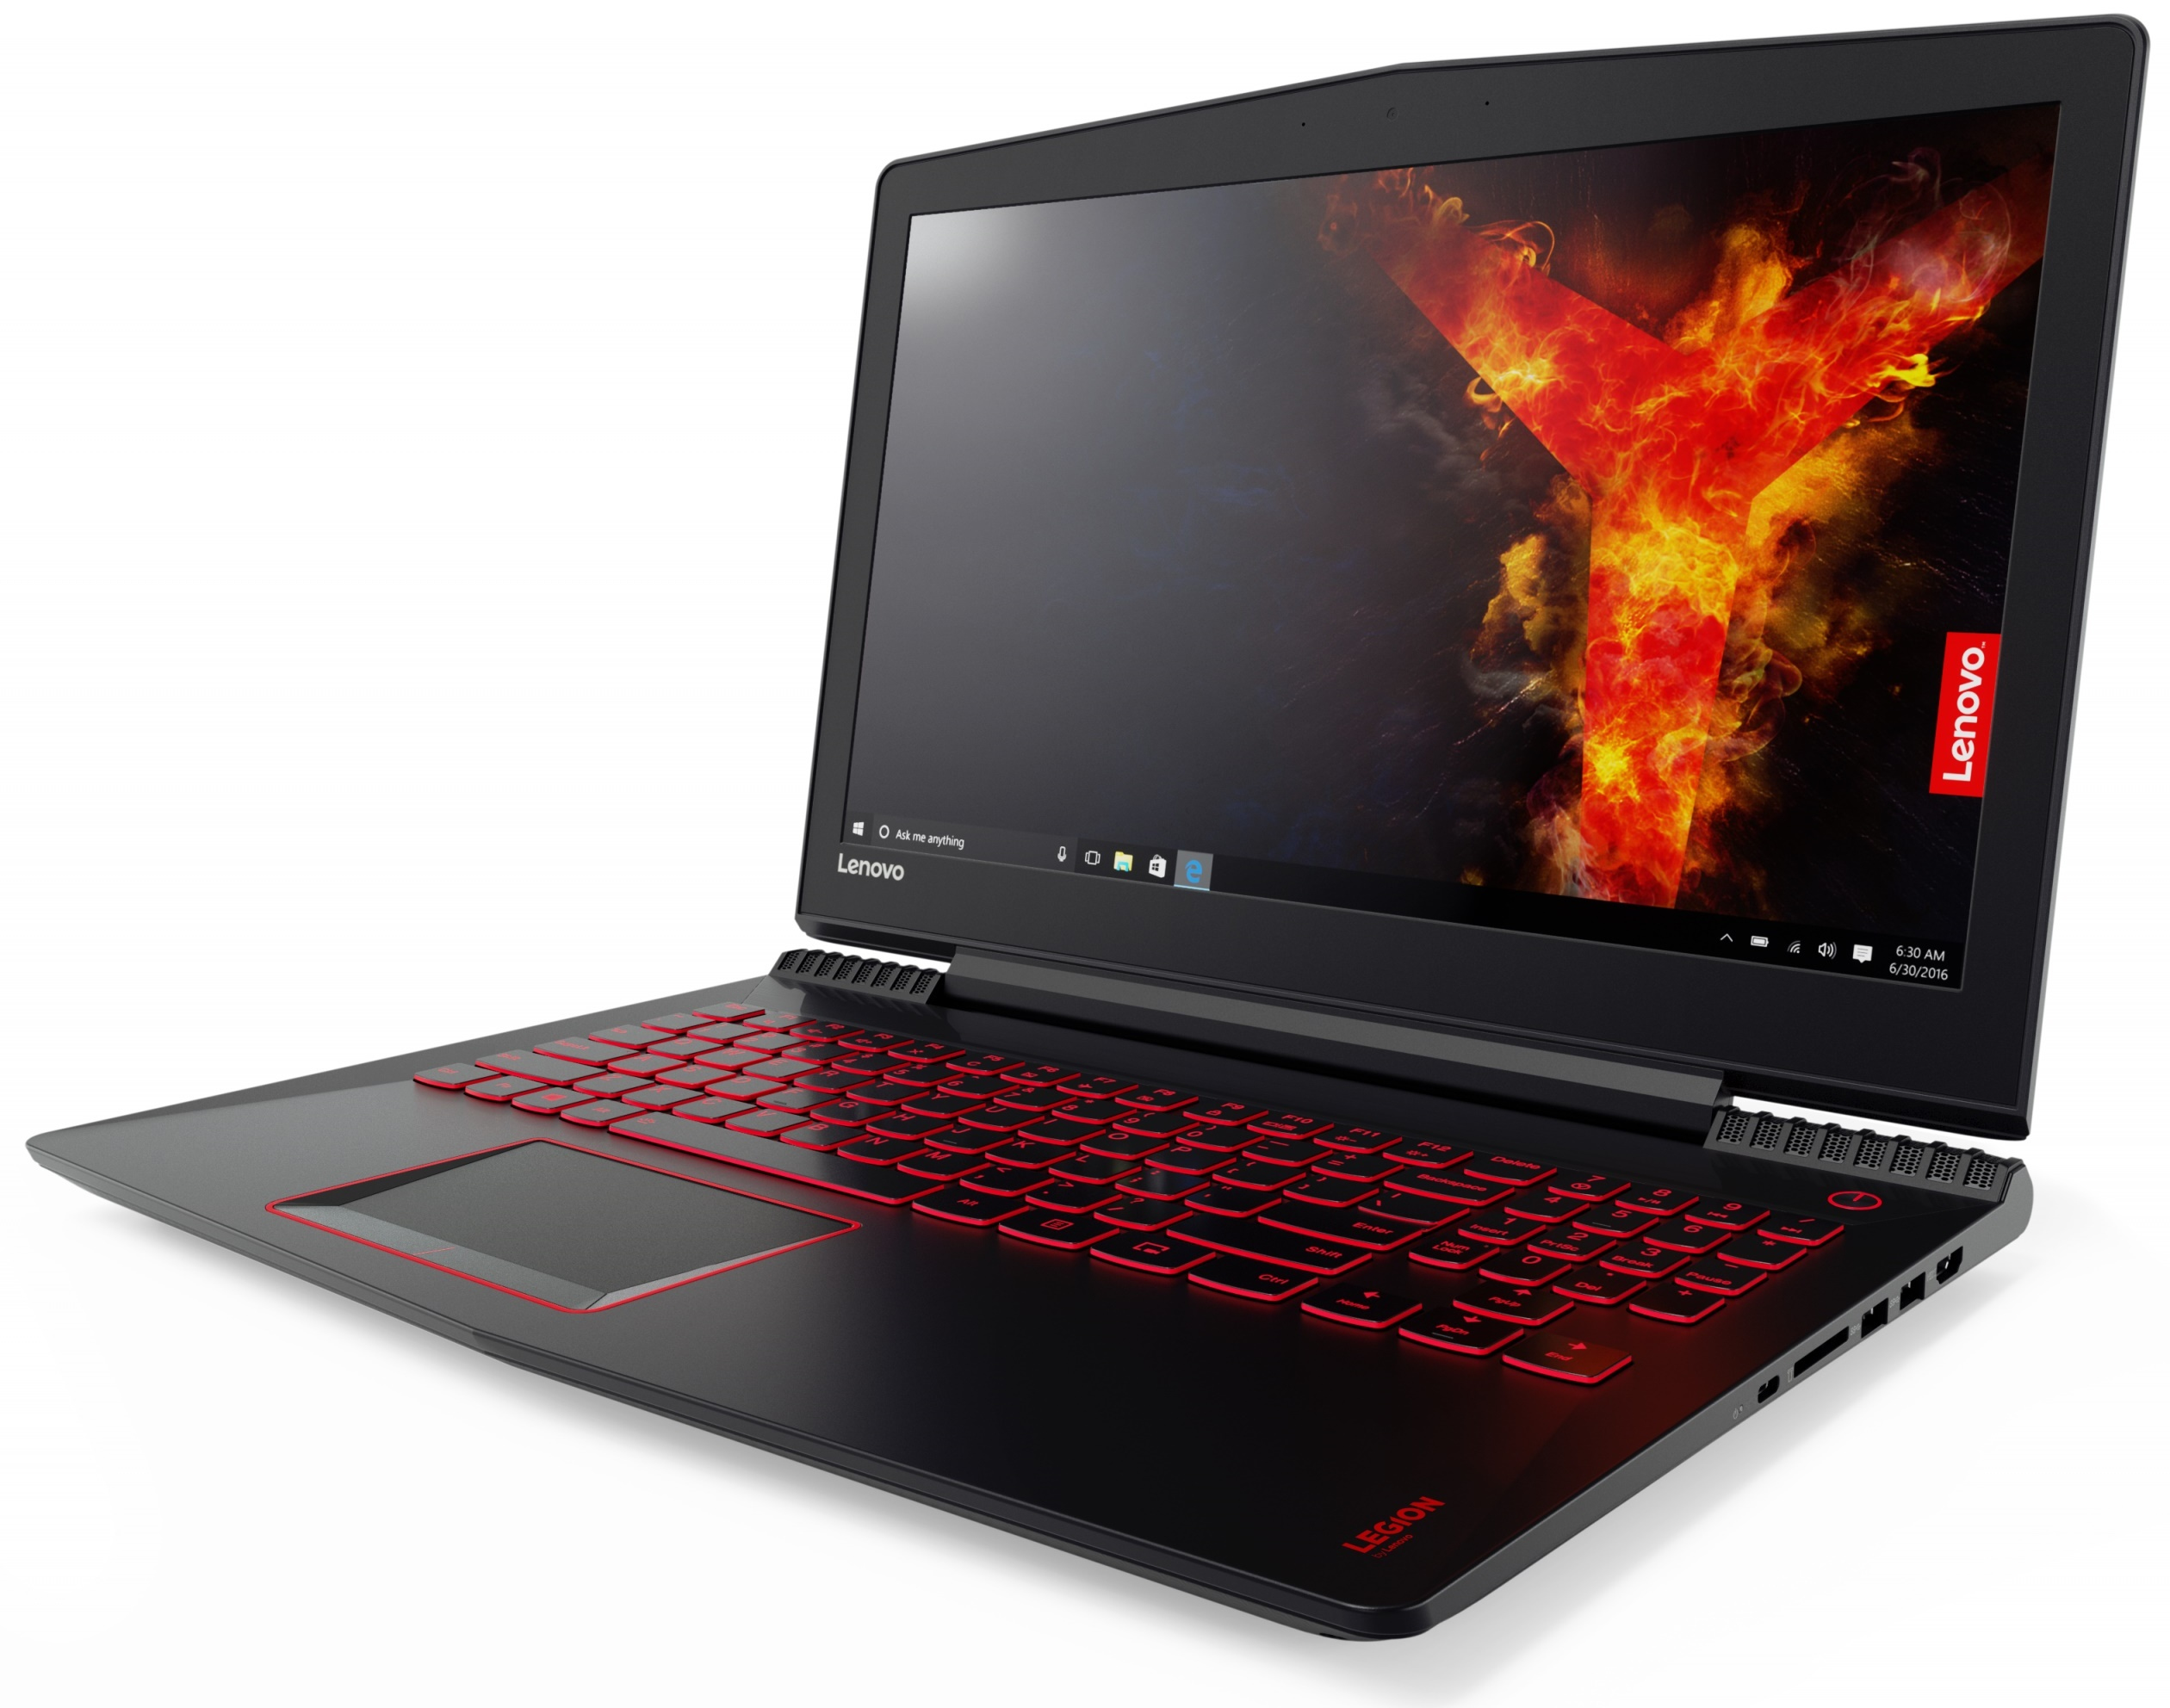 Laptop Gamer Lenovo Legion Y520 I5 7300Hq 8Gb 1Tb Gtx1050 15.6" Win 10